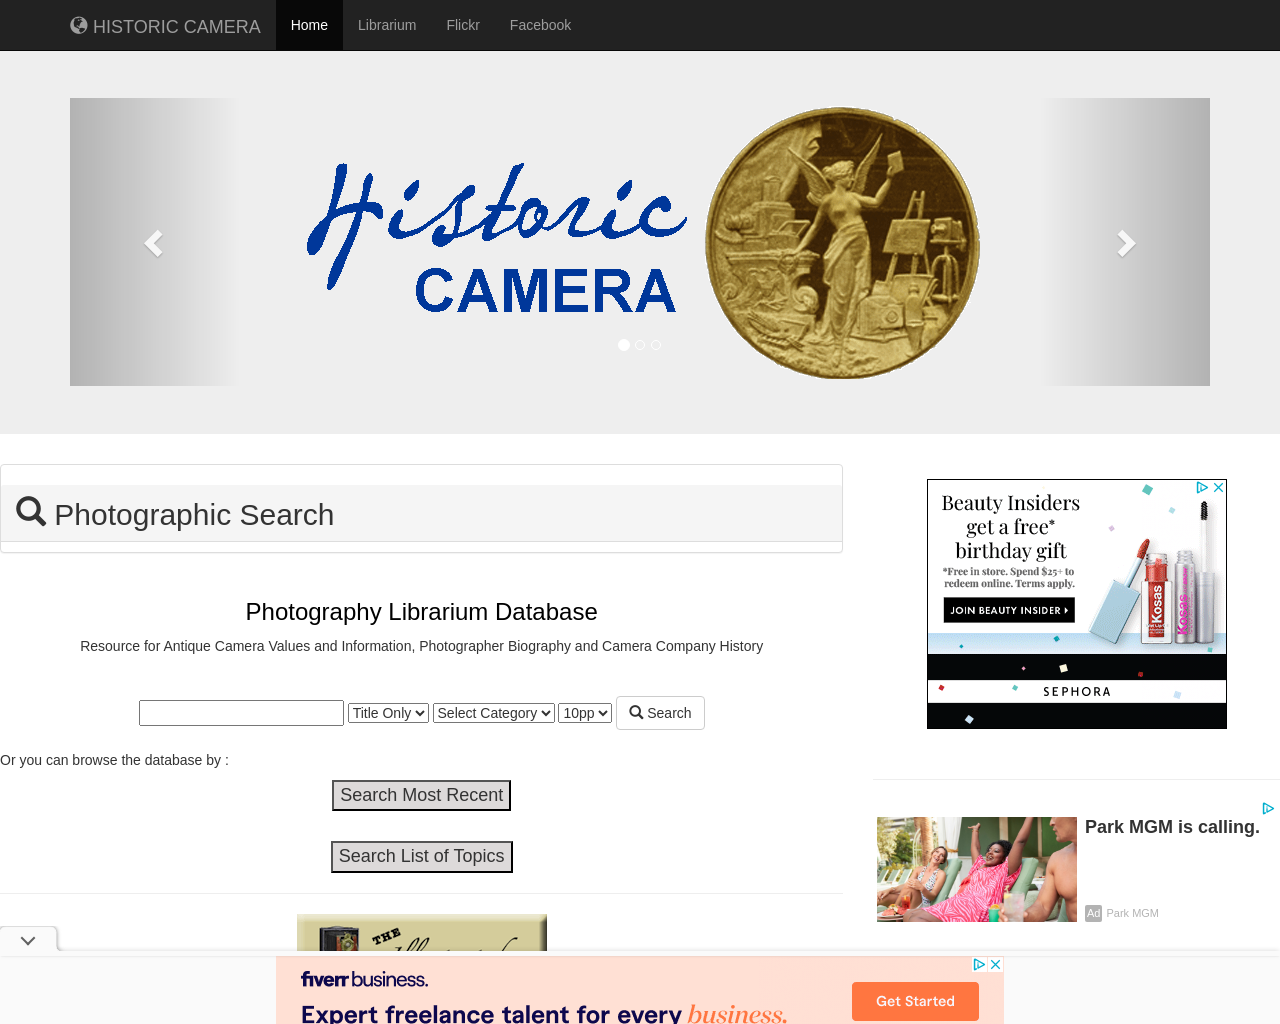 historiccamera.com